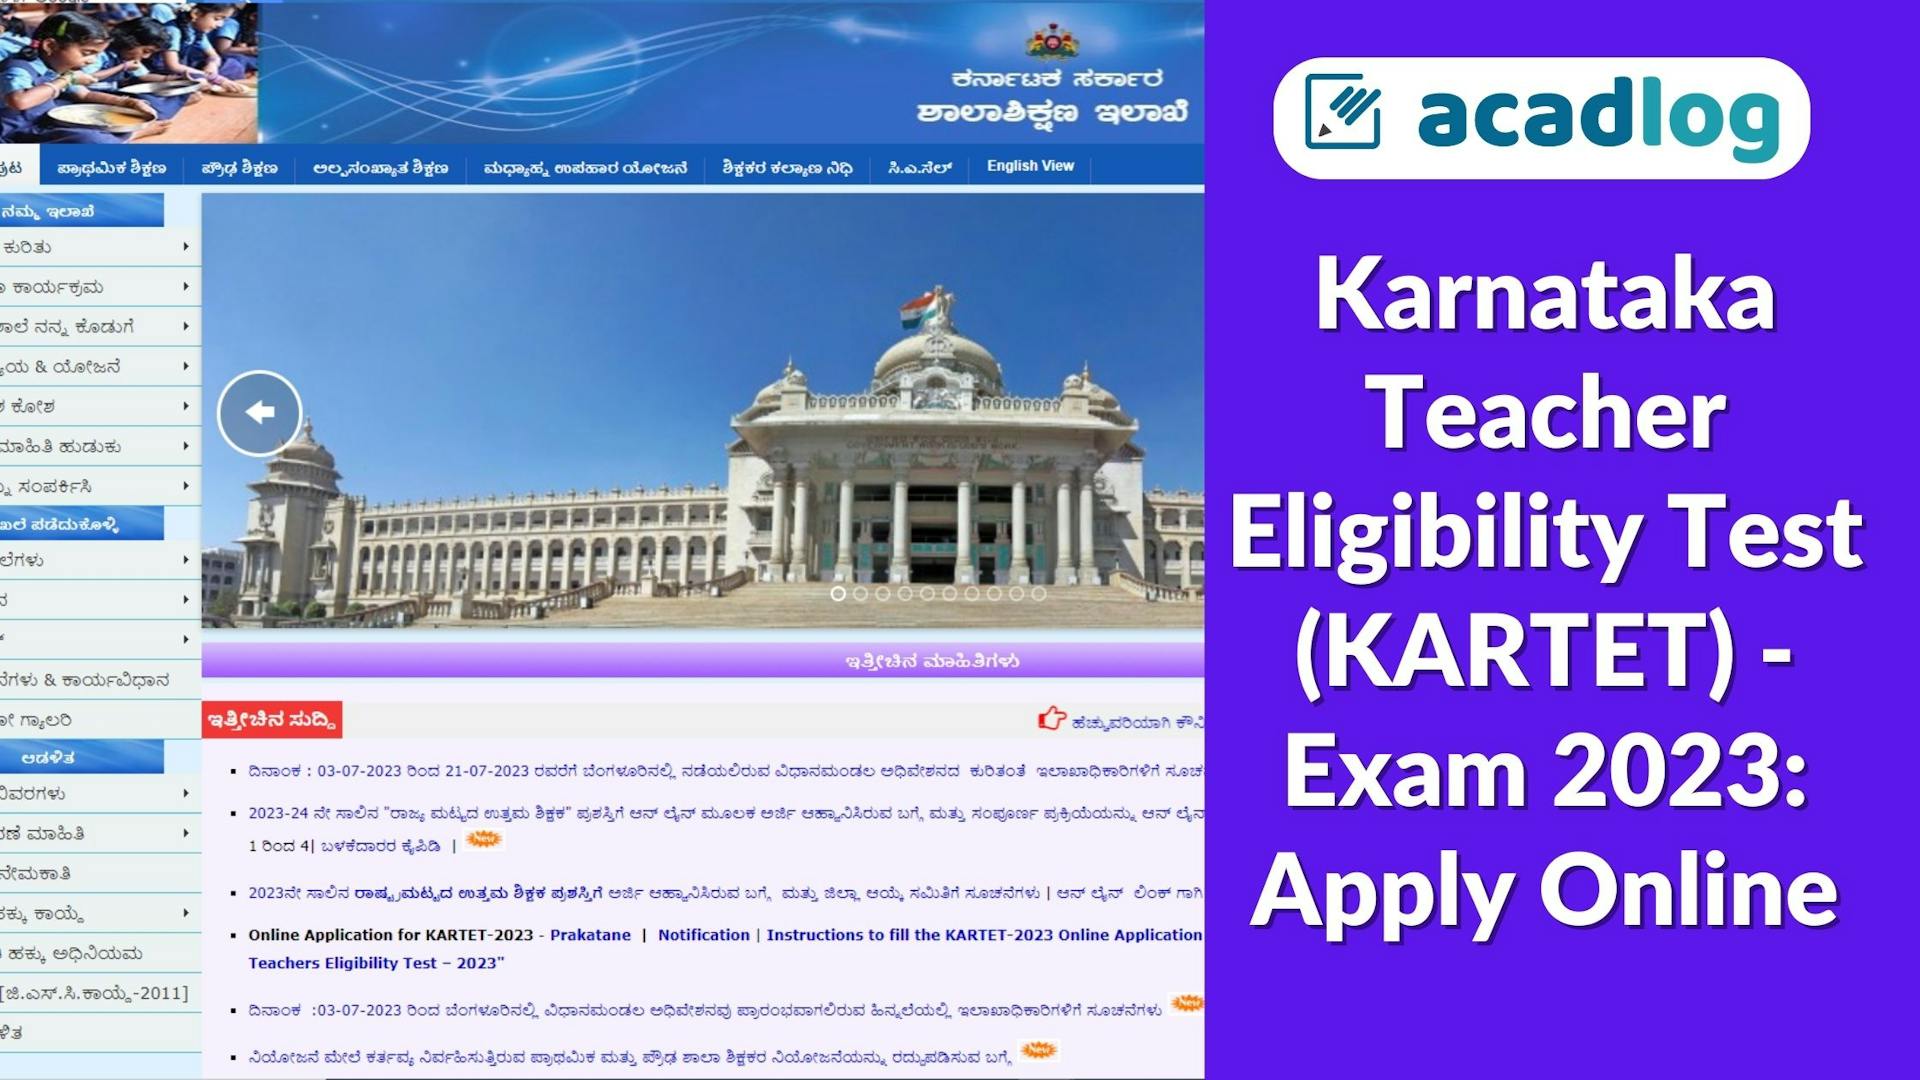 Karnataka Teacher Eligibility Test (KARTET) - Exam 2023: Apply Online